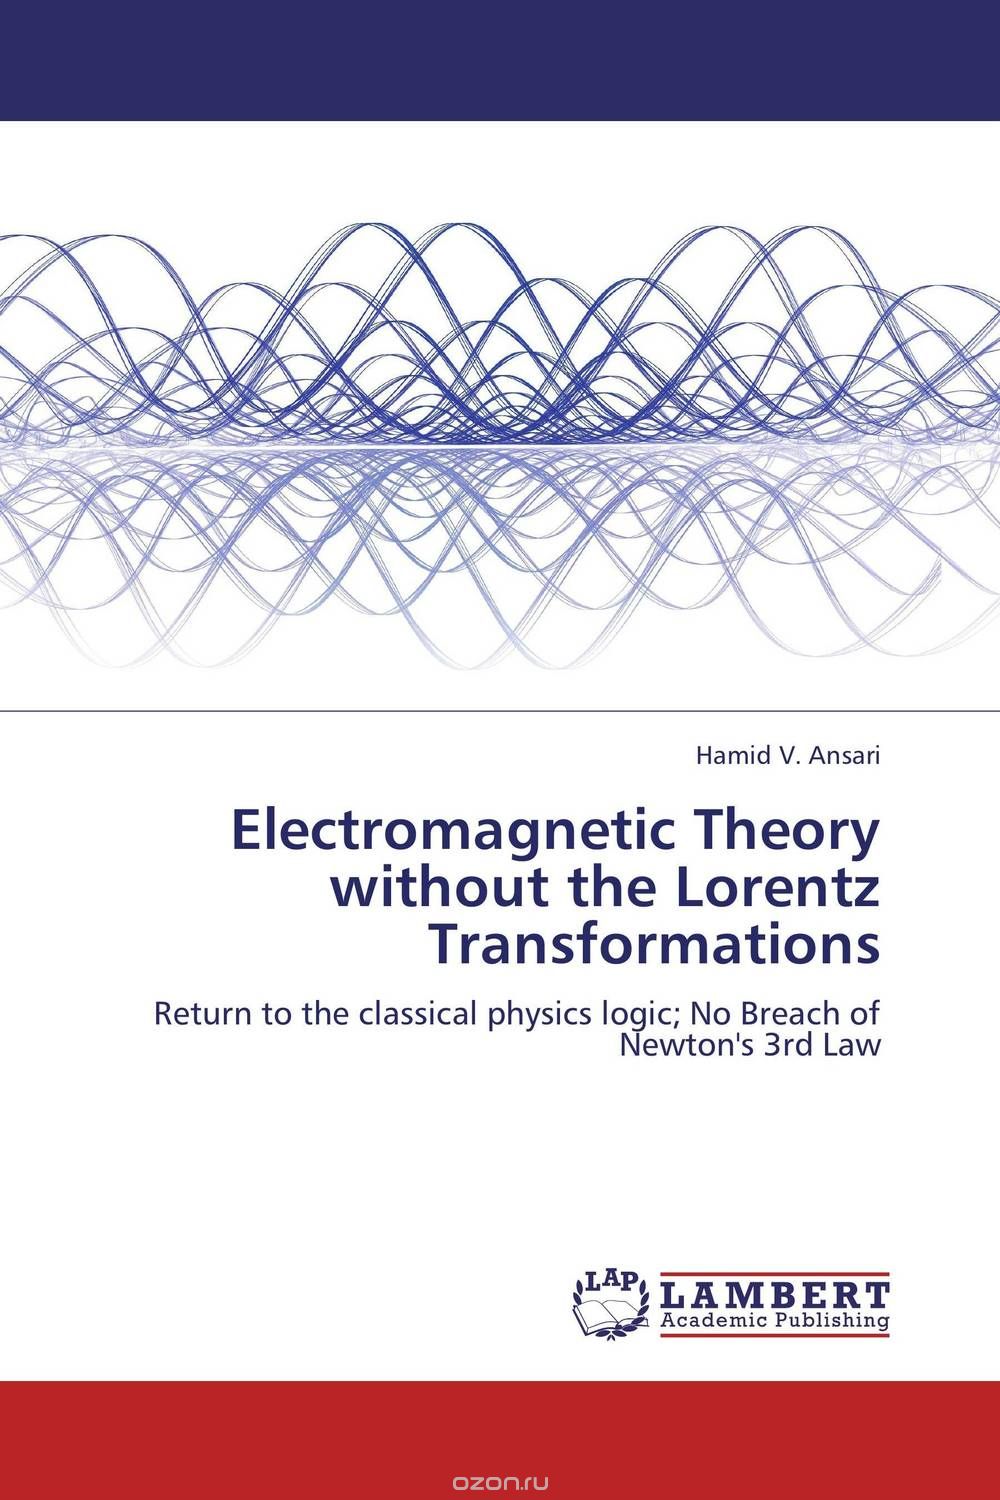 Скачать книгу "Electromagnetic Theory without the Lorentz Transformations"